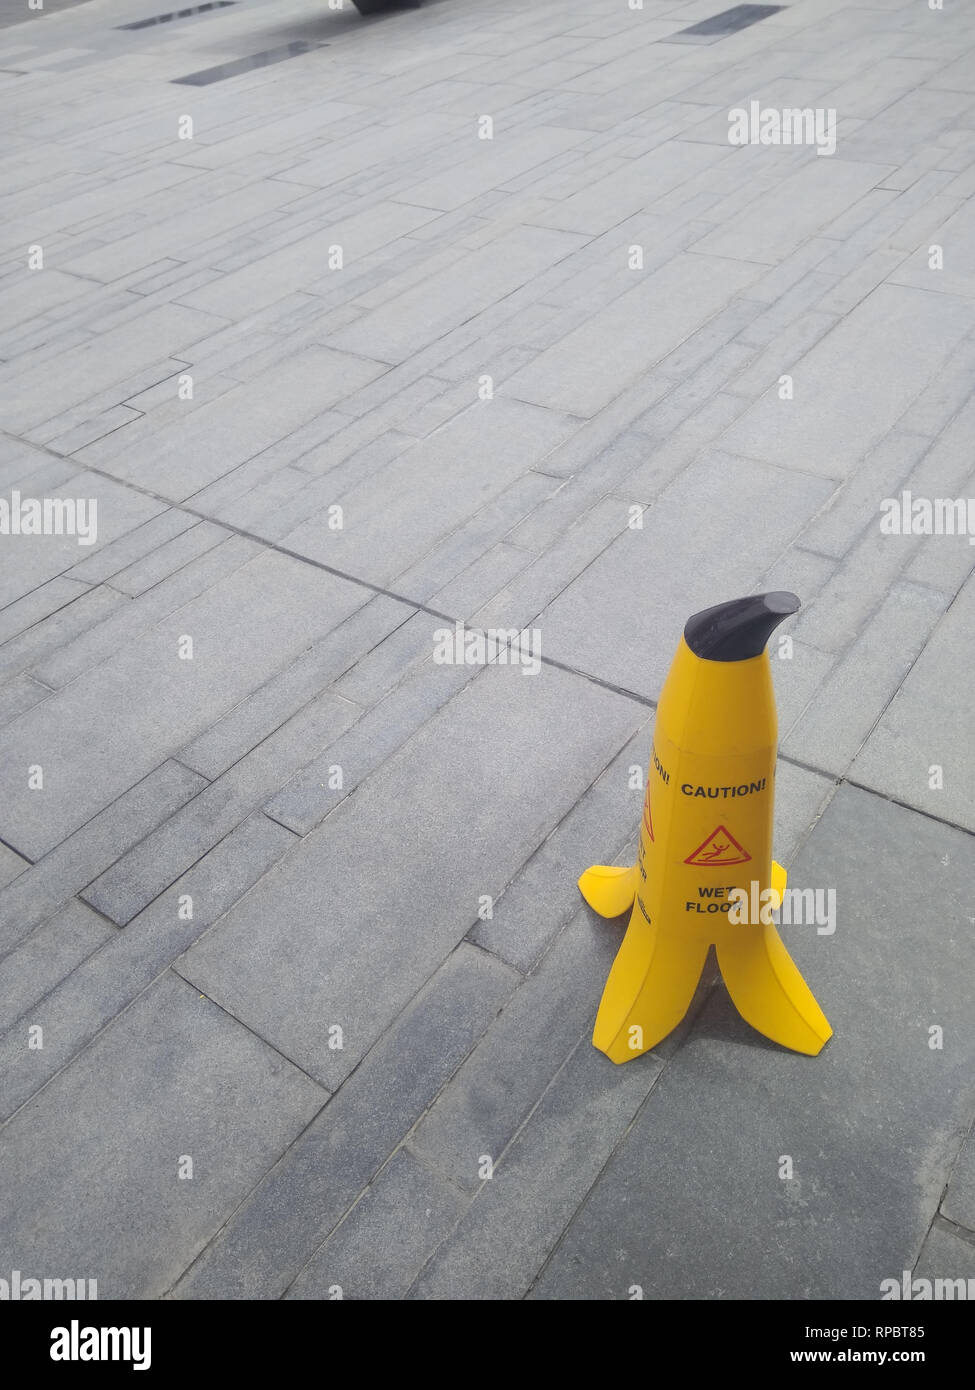 Dubai-Slippery floor banana warning sign on the sidewalk Stock Photo